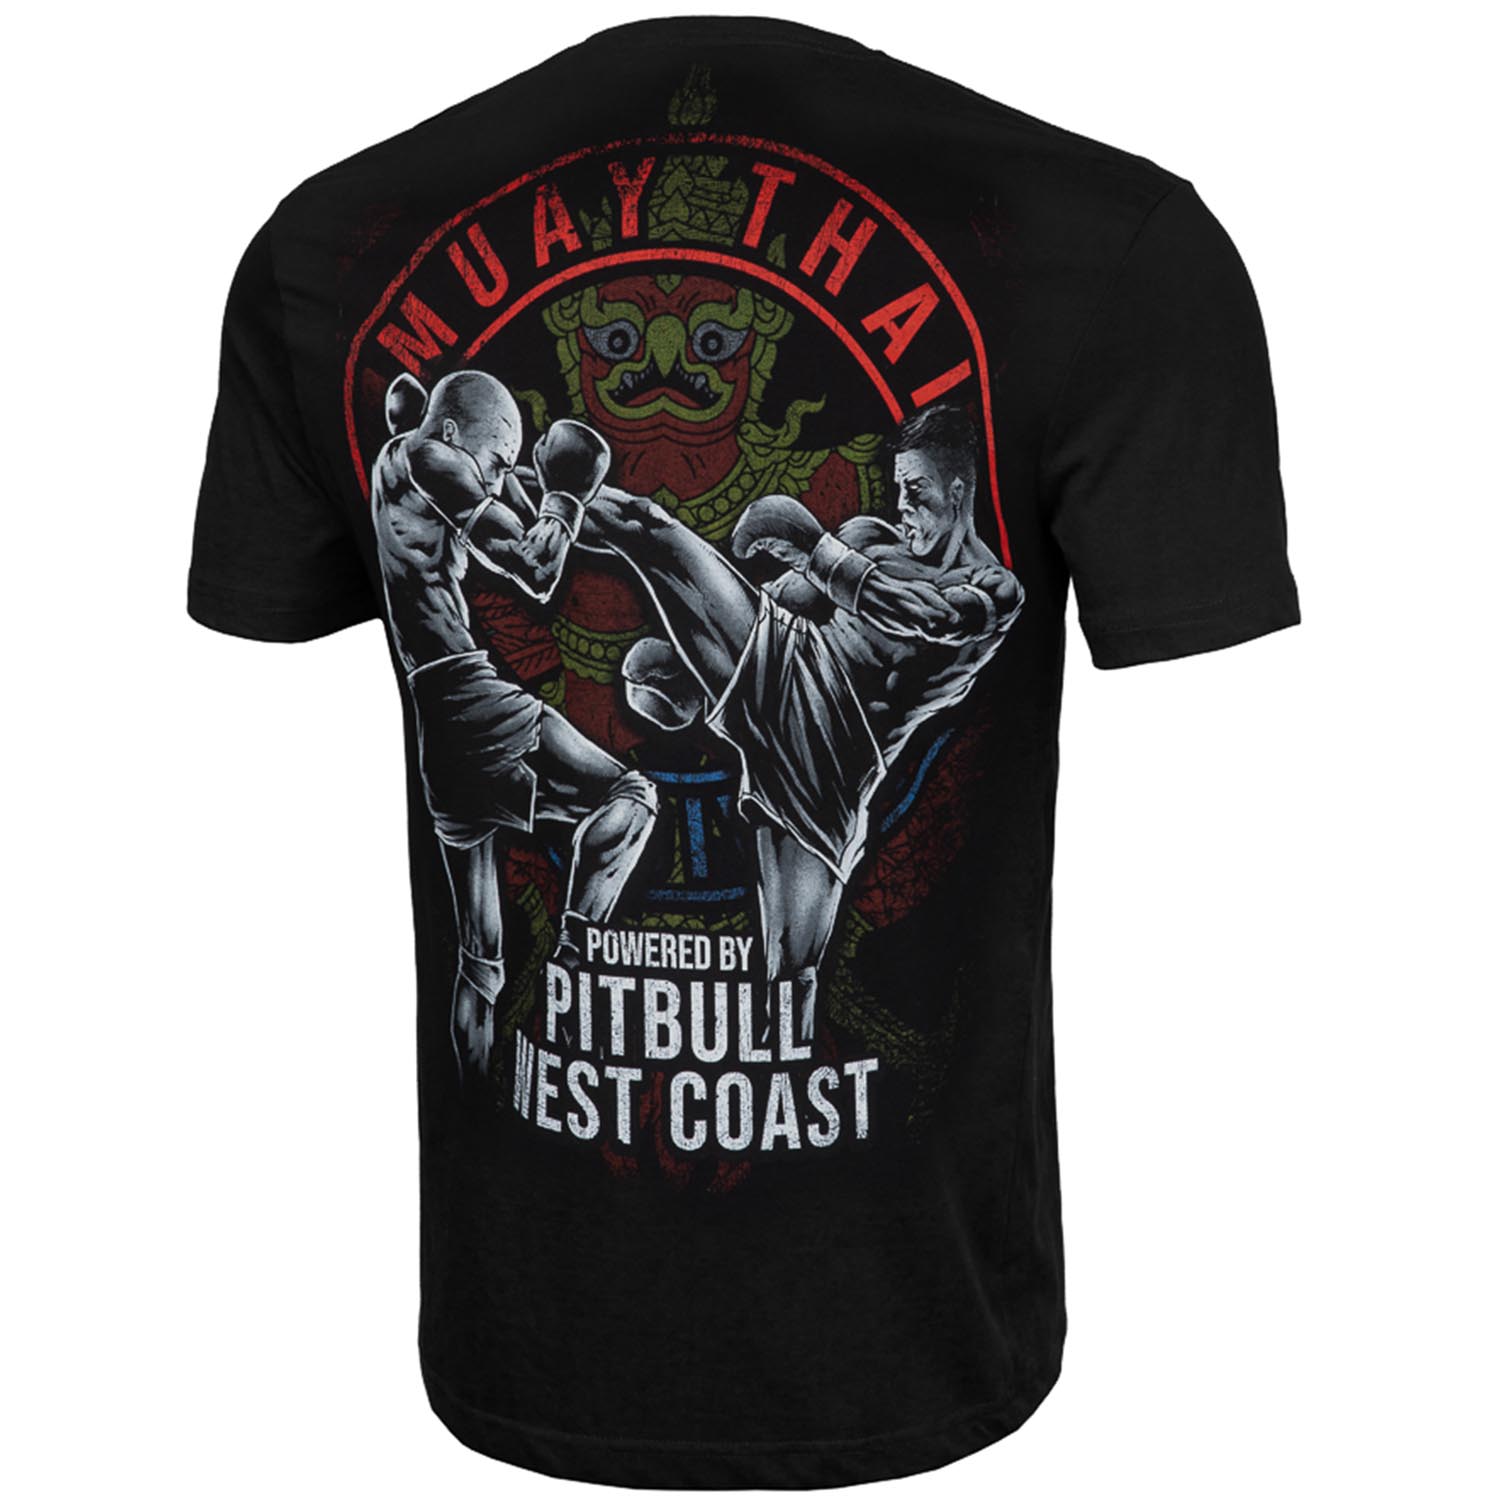 Pit Bull West Coast T-Shirt, Muay Thai, schwarz